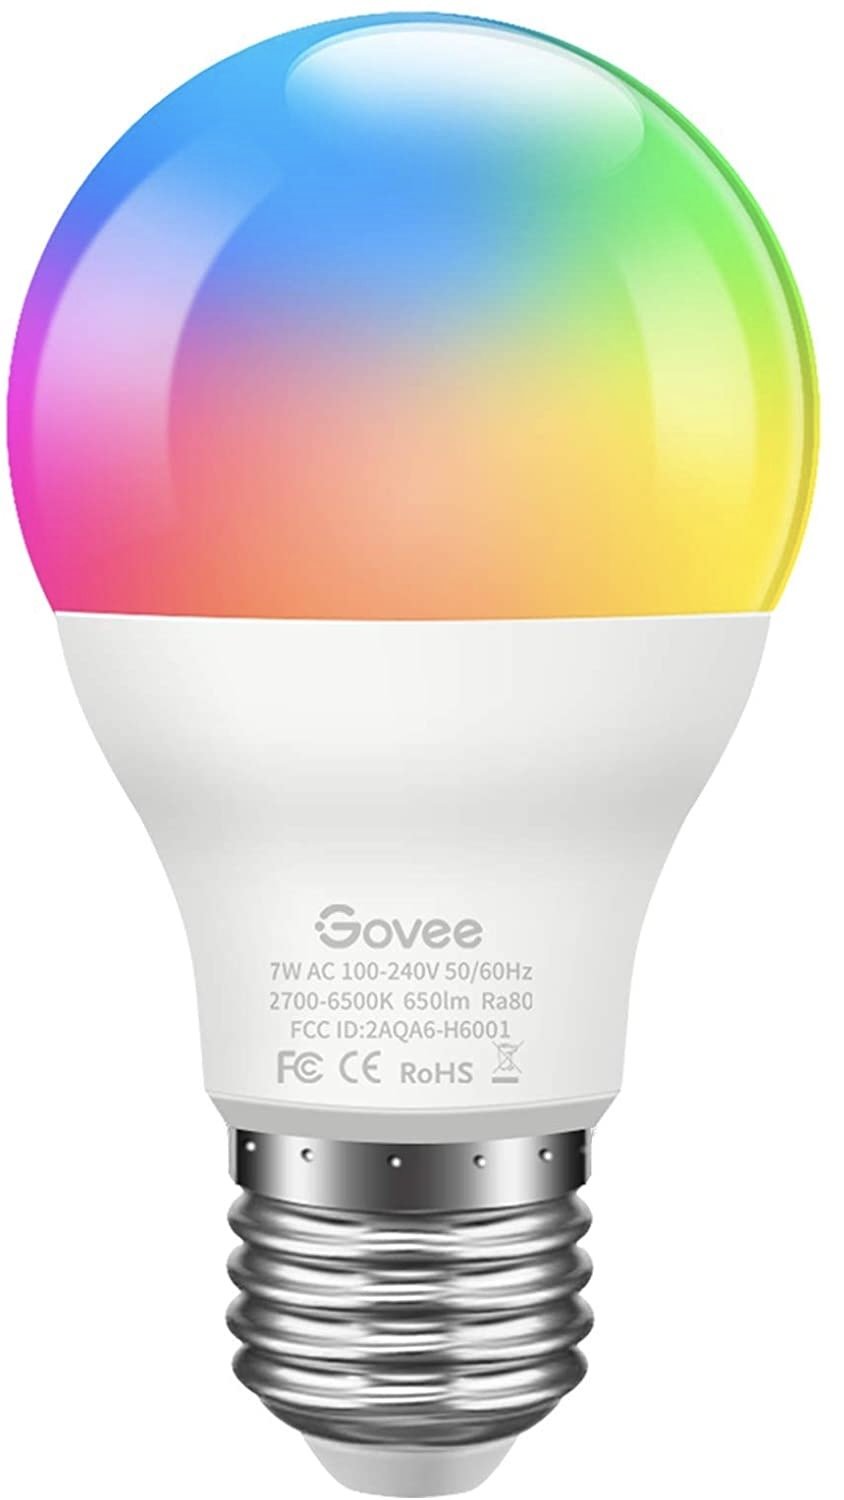 Govee Bluetooth Bulb